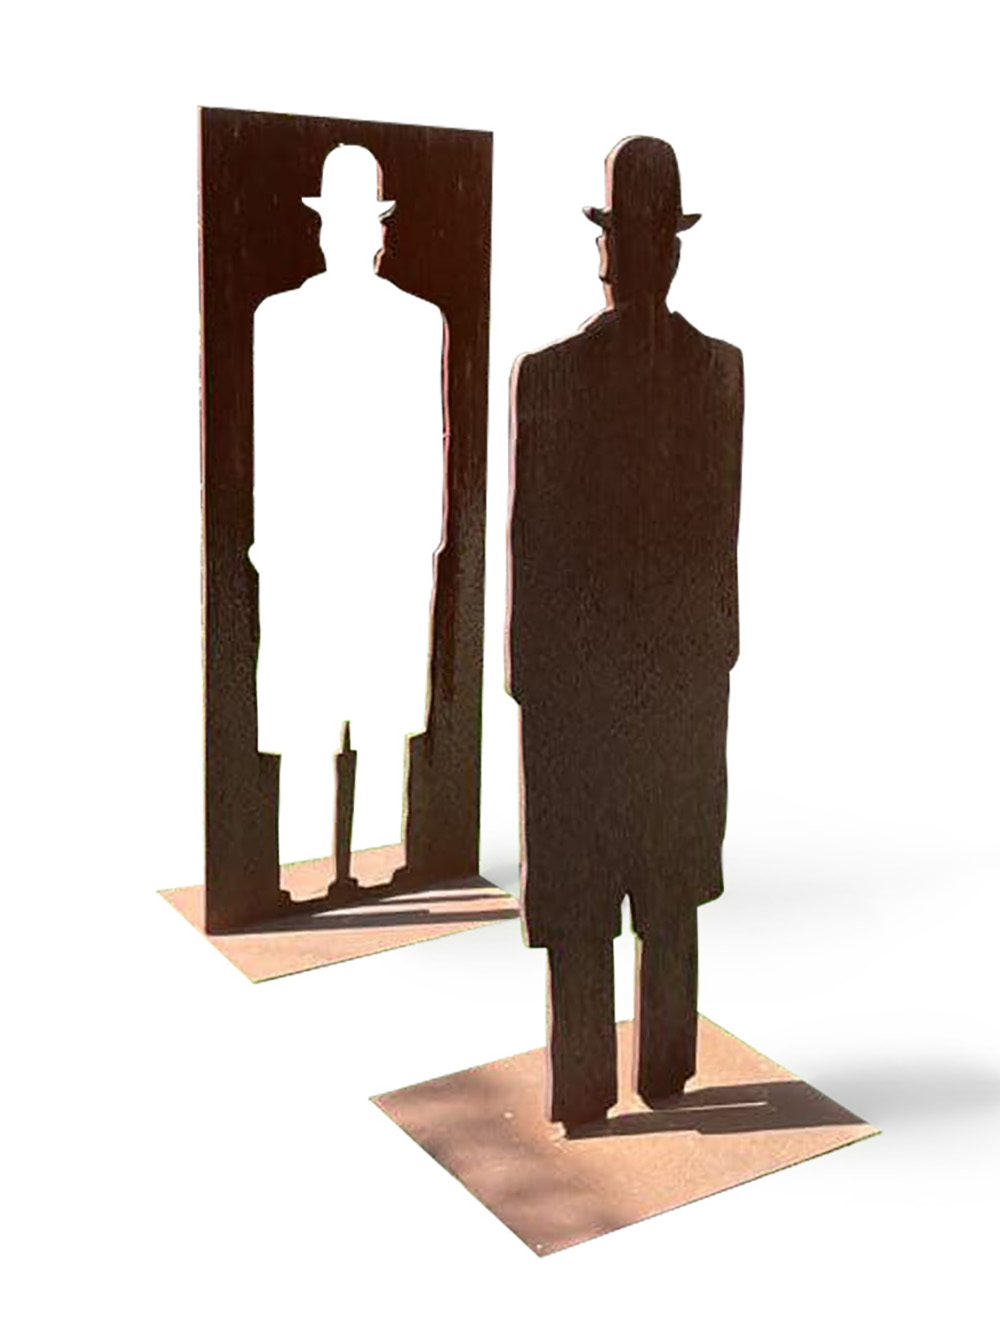 JOSÉ LUIS PASCUAL SAMARANCH (Barcelona, 1947). "Homage to Magritte". 2005. Corten steel. Size: 240 x